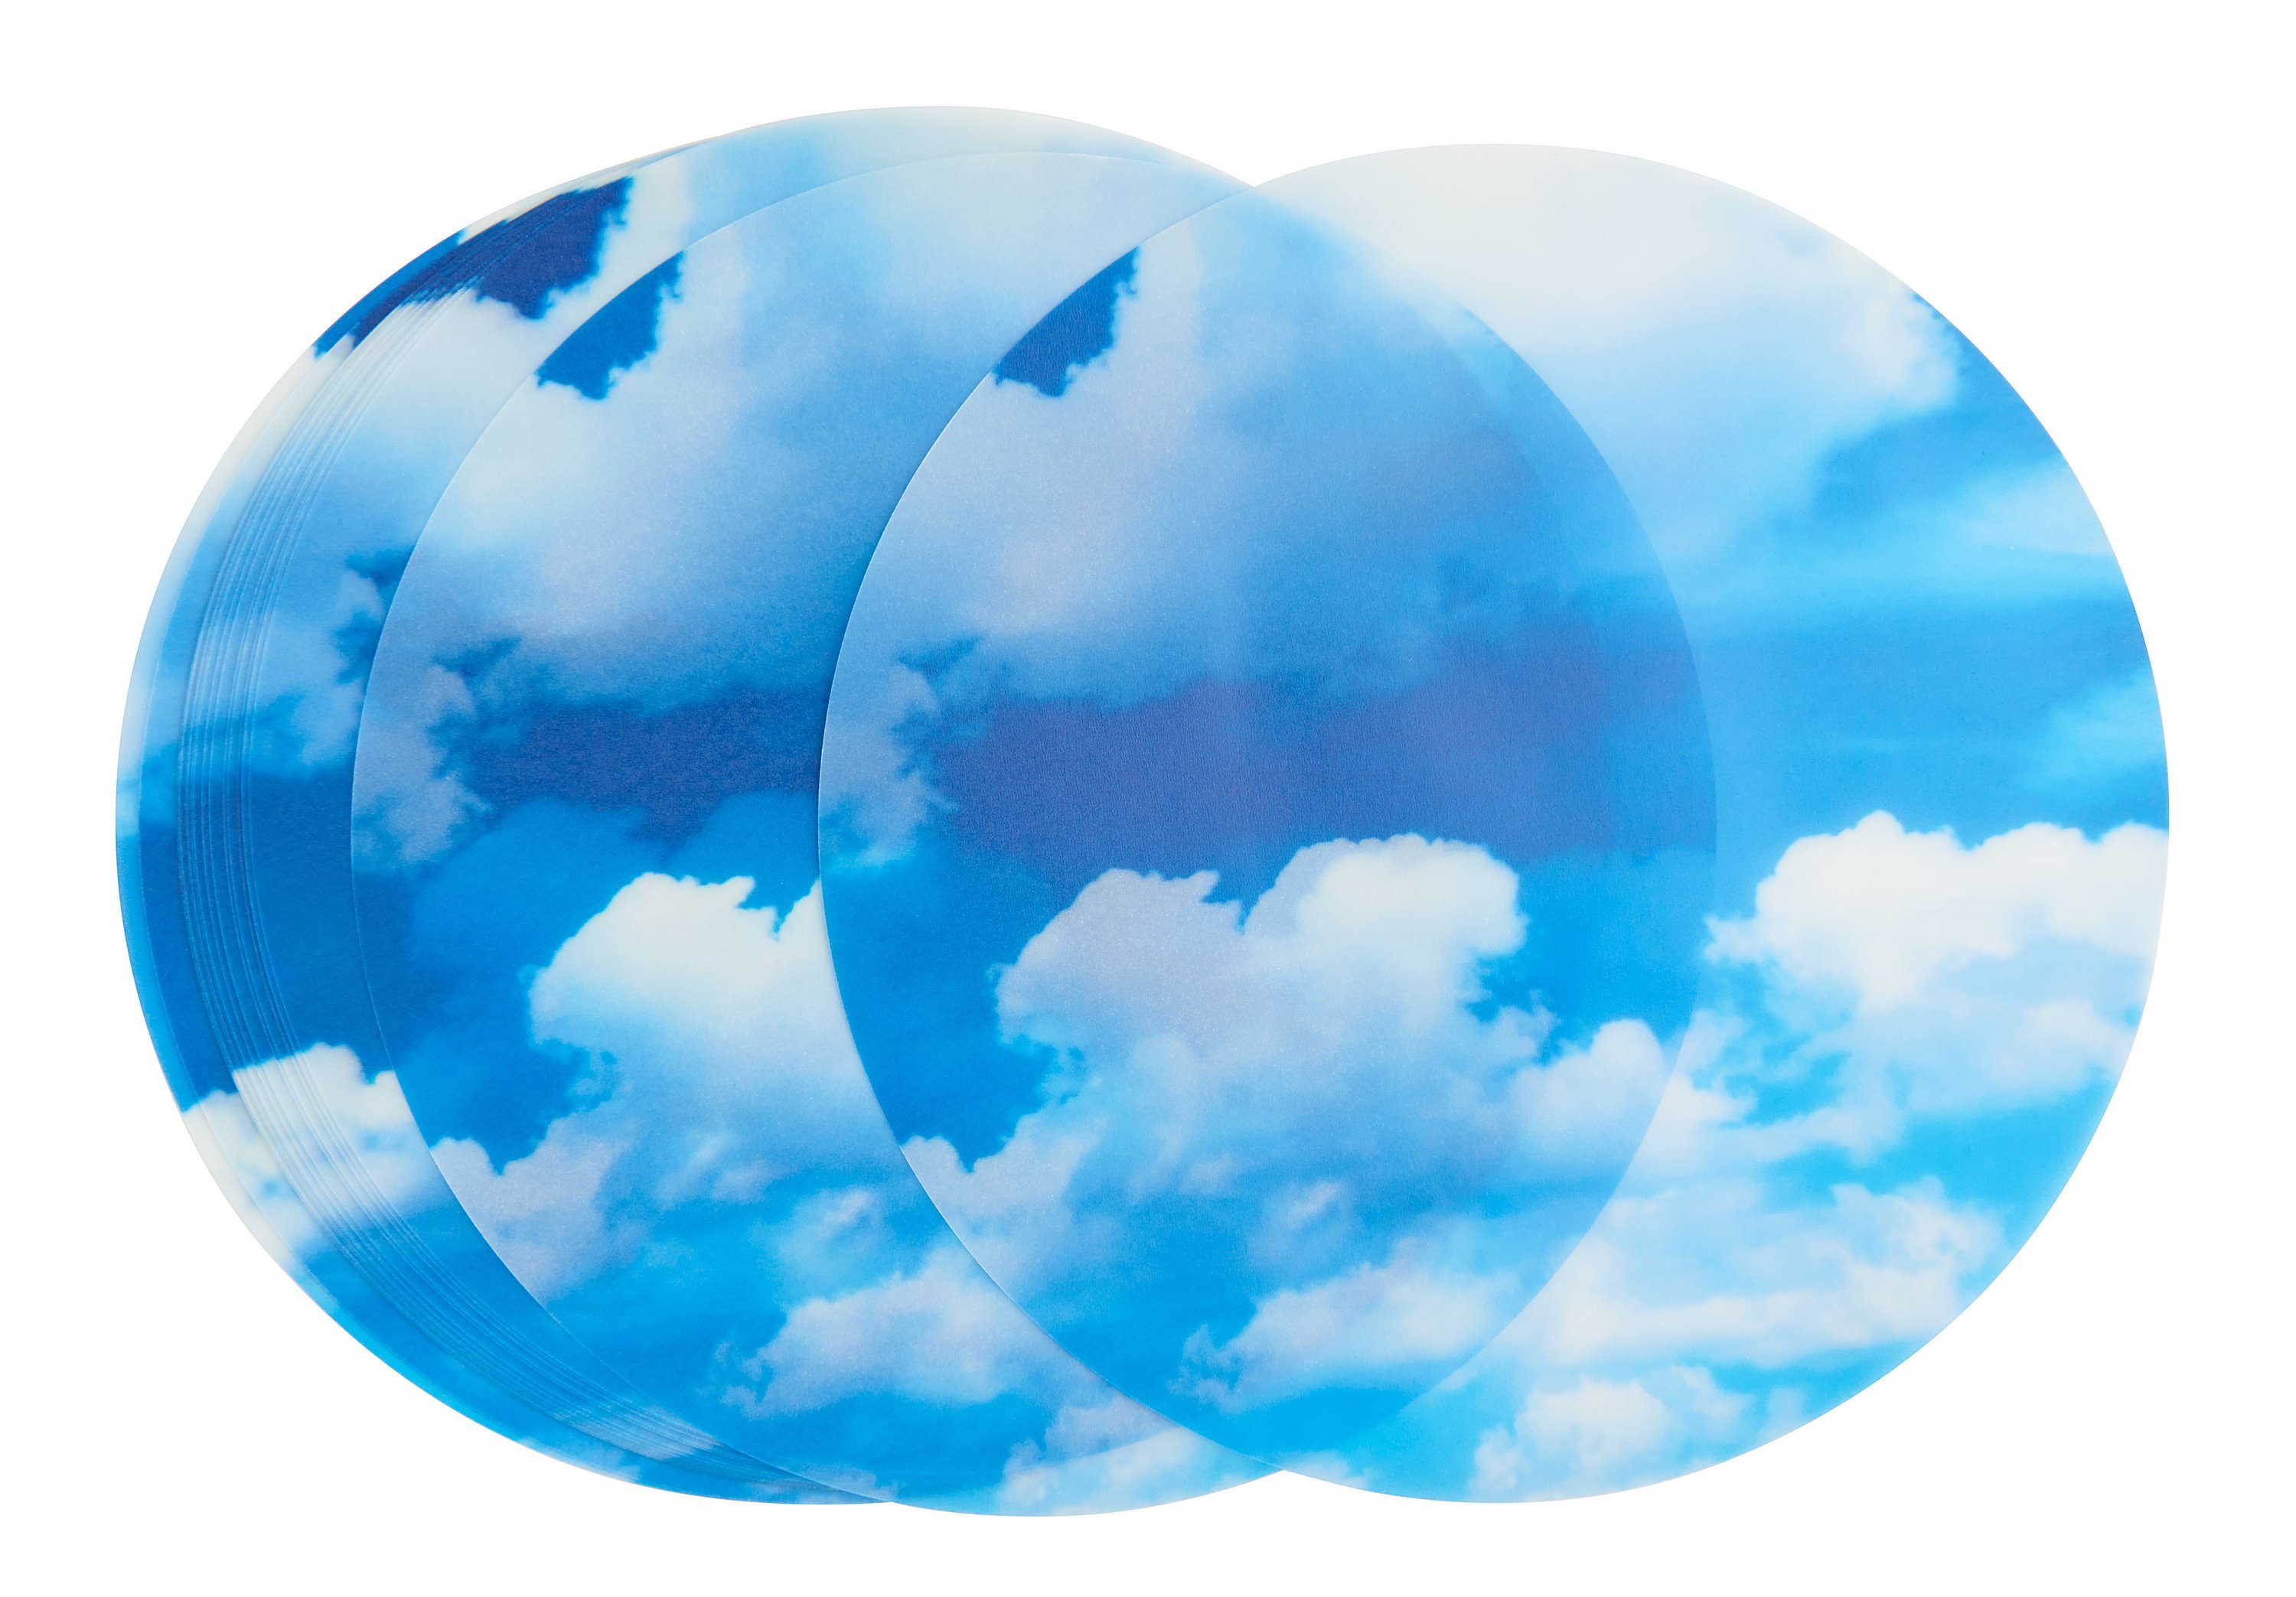 Folia Transparentpapier Laternenzuschnitte aus Transparentpapier, 20 Stück Blau | Himmel